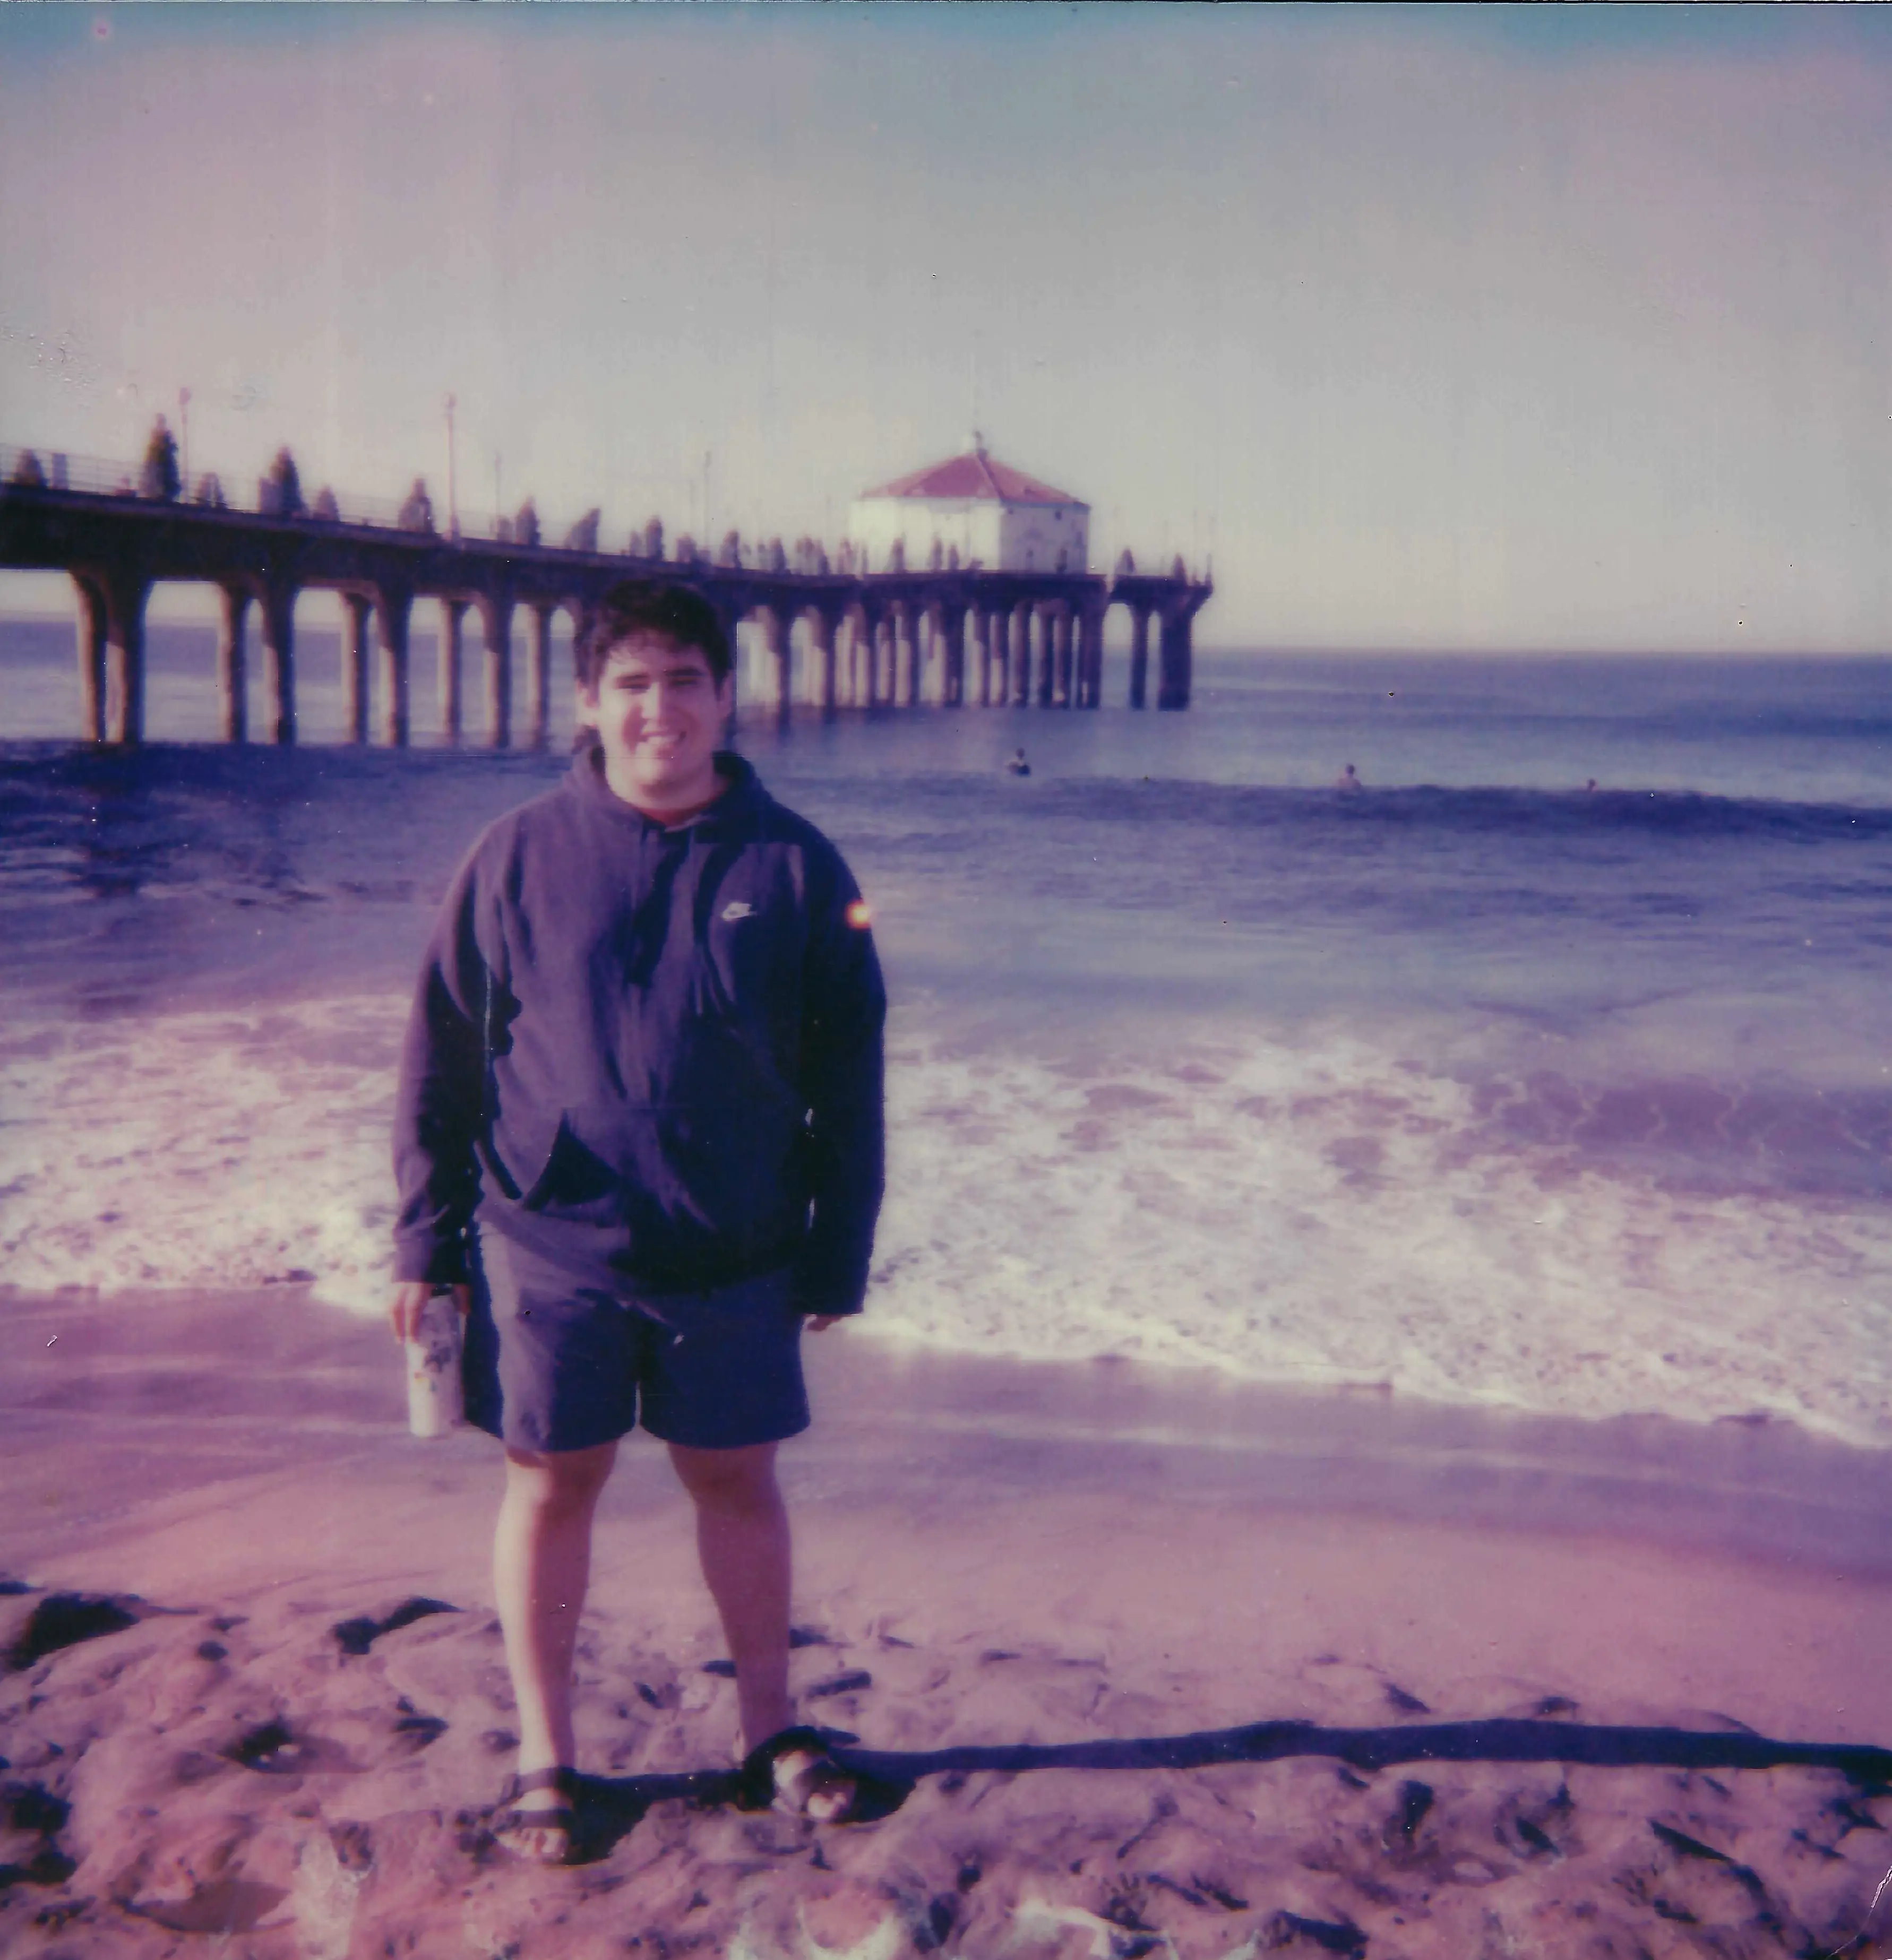 Juan Pablo standing on beach